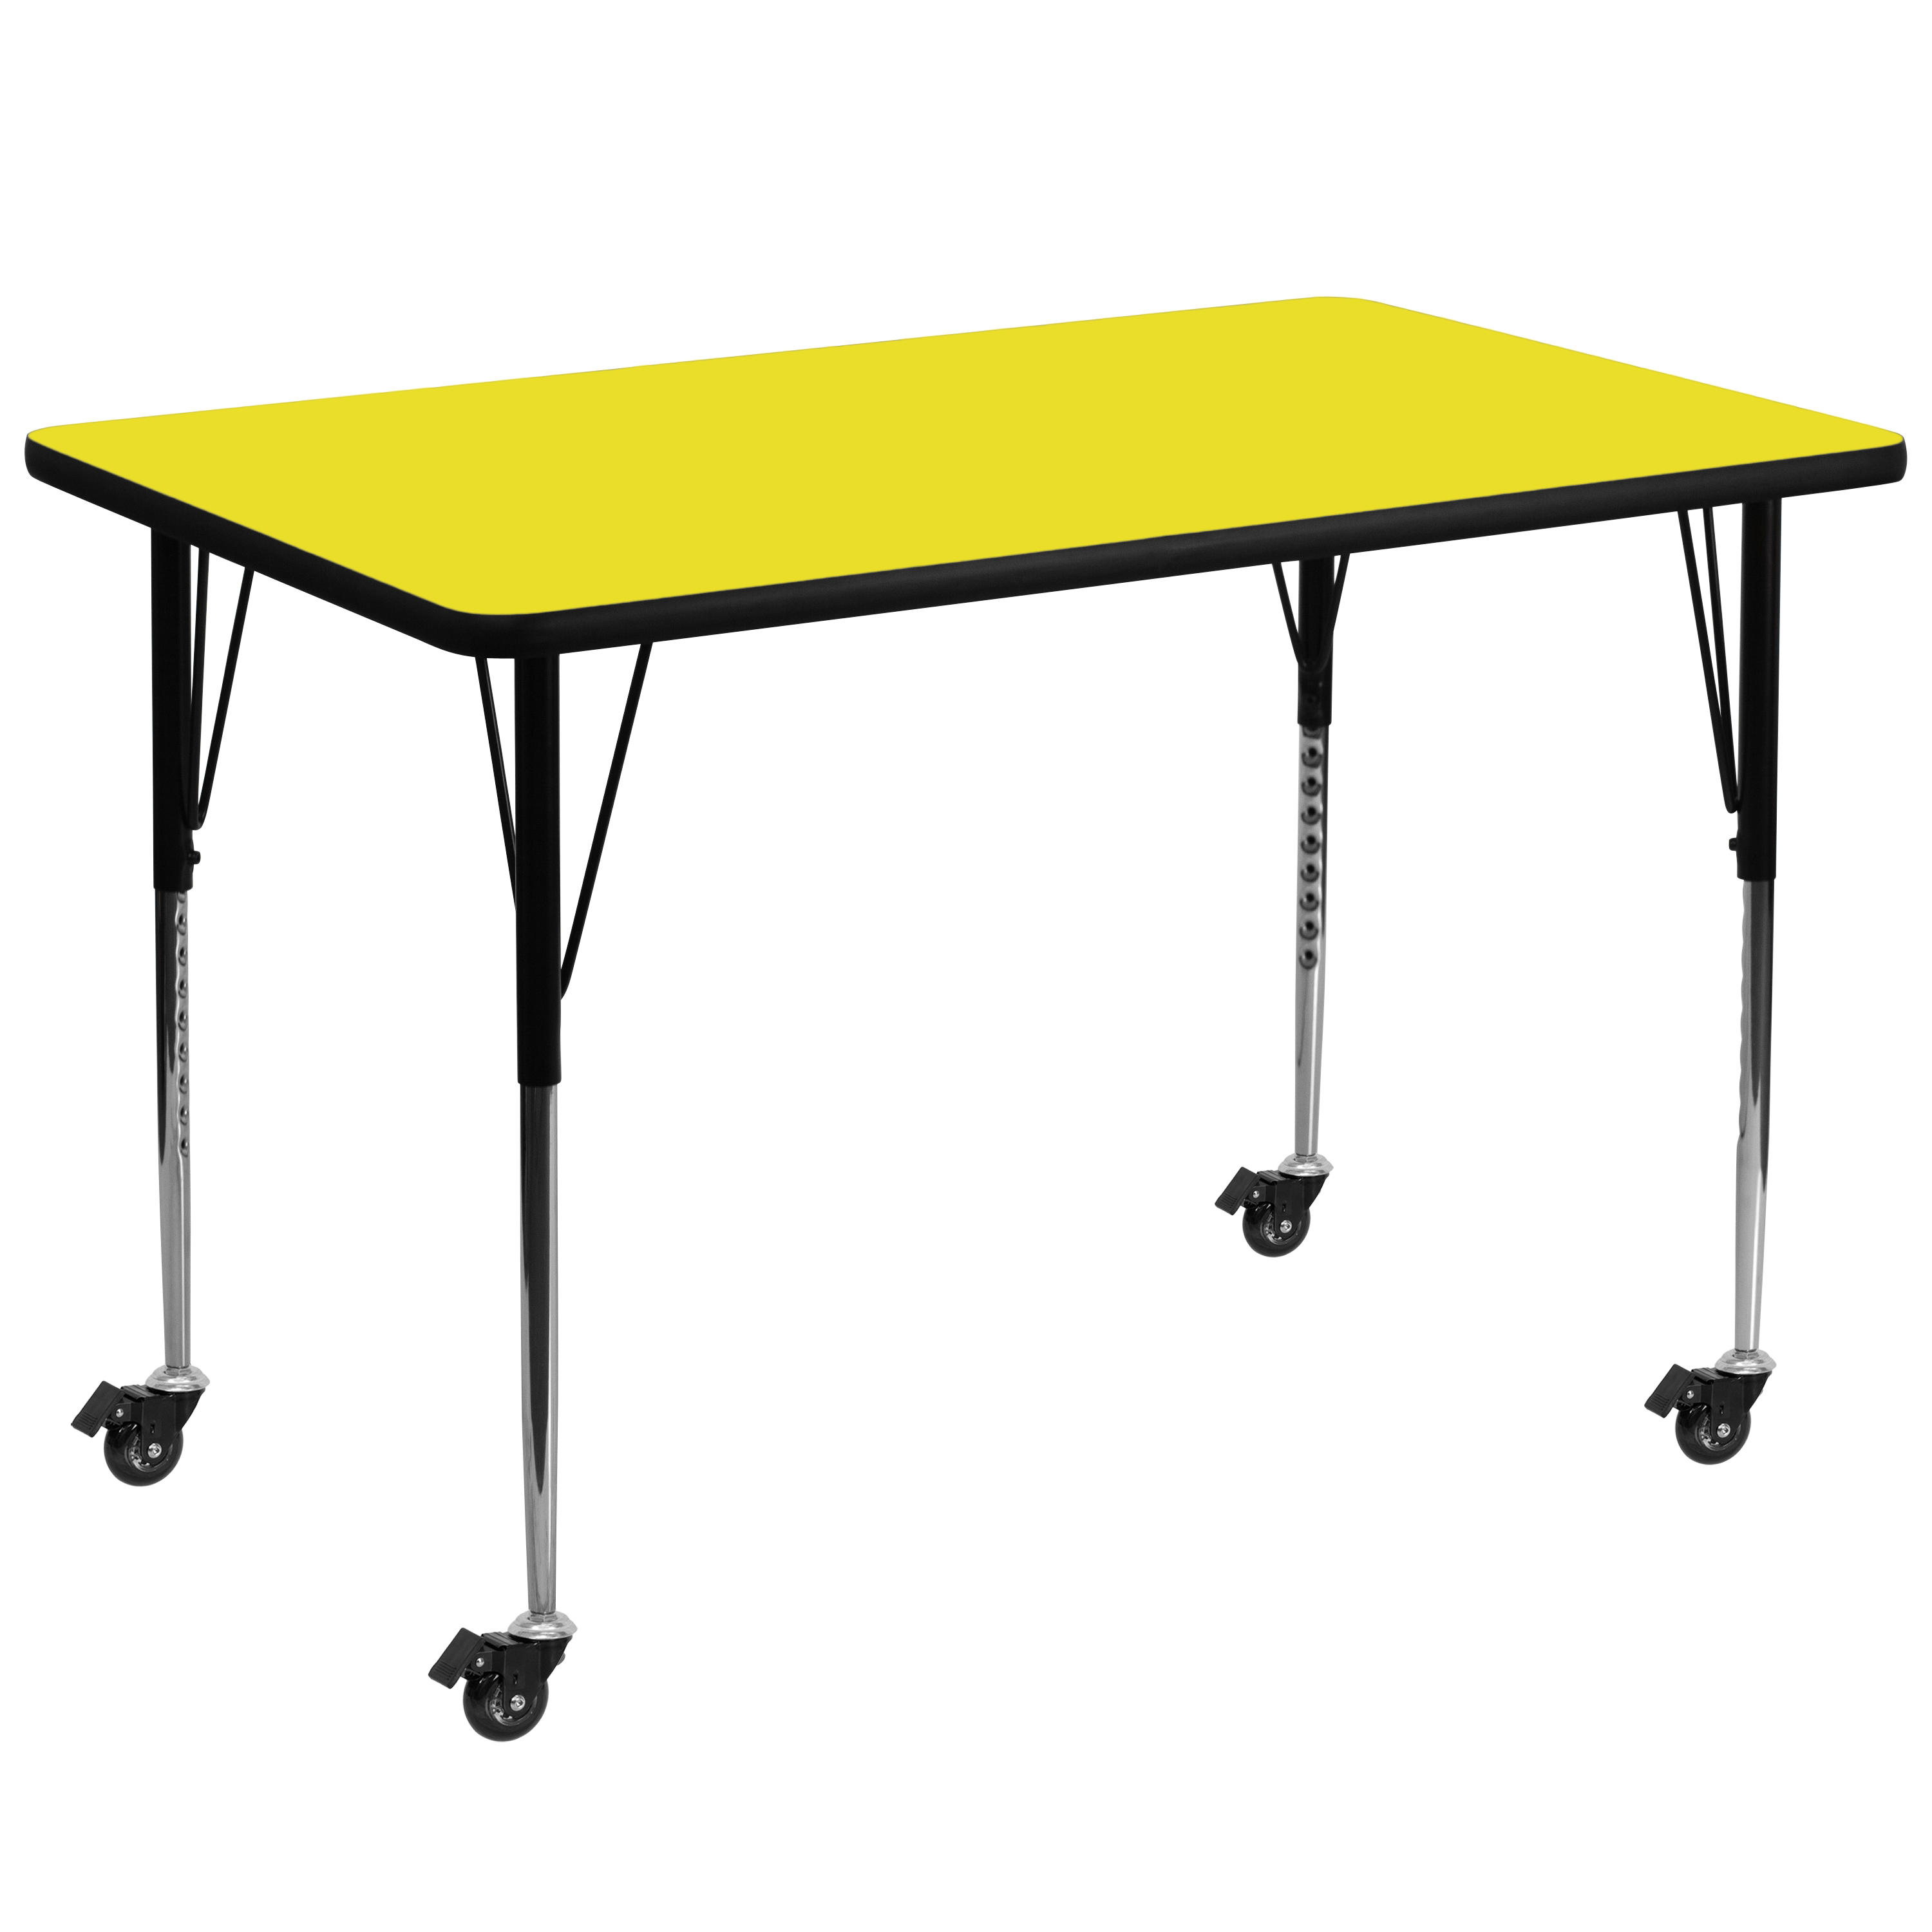 Flash Furniture Wren Mobile Wren 36''W x 72''L Rectangular Yellow HP Laminate Activity Table - Standard Height Adjustable Legs - image 1 of 3